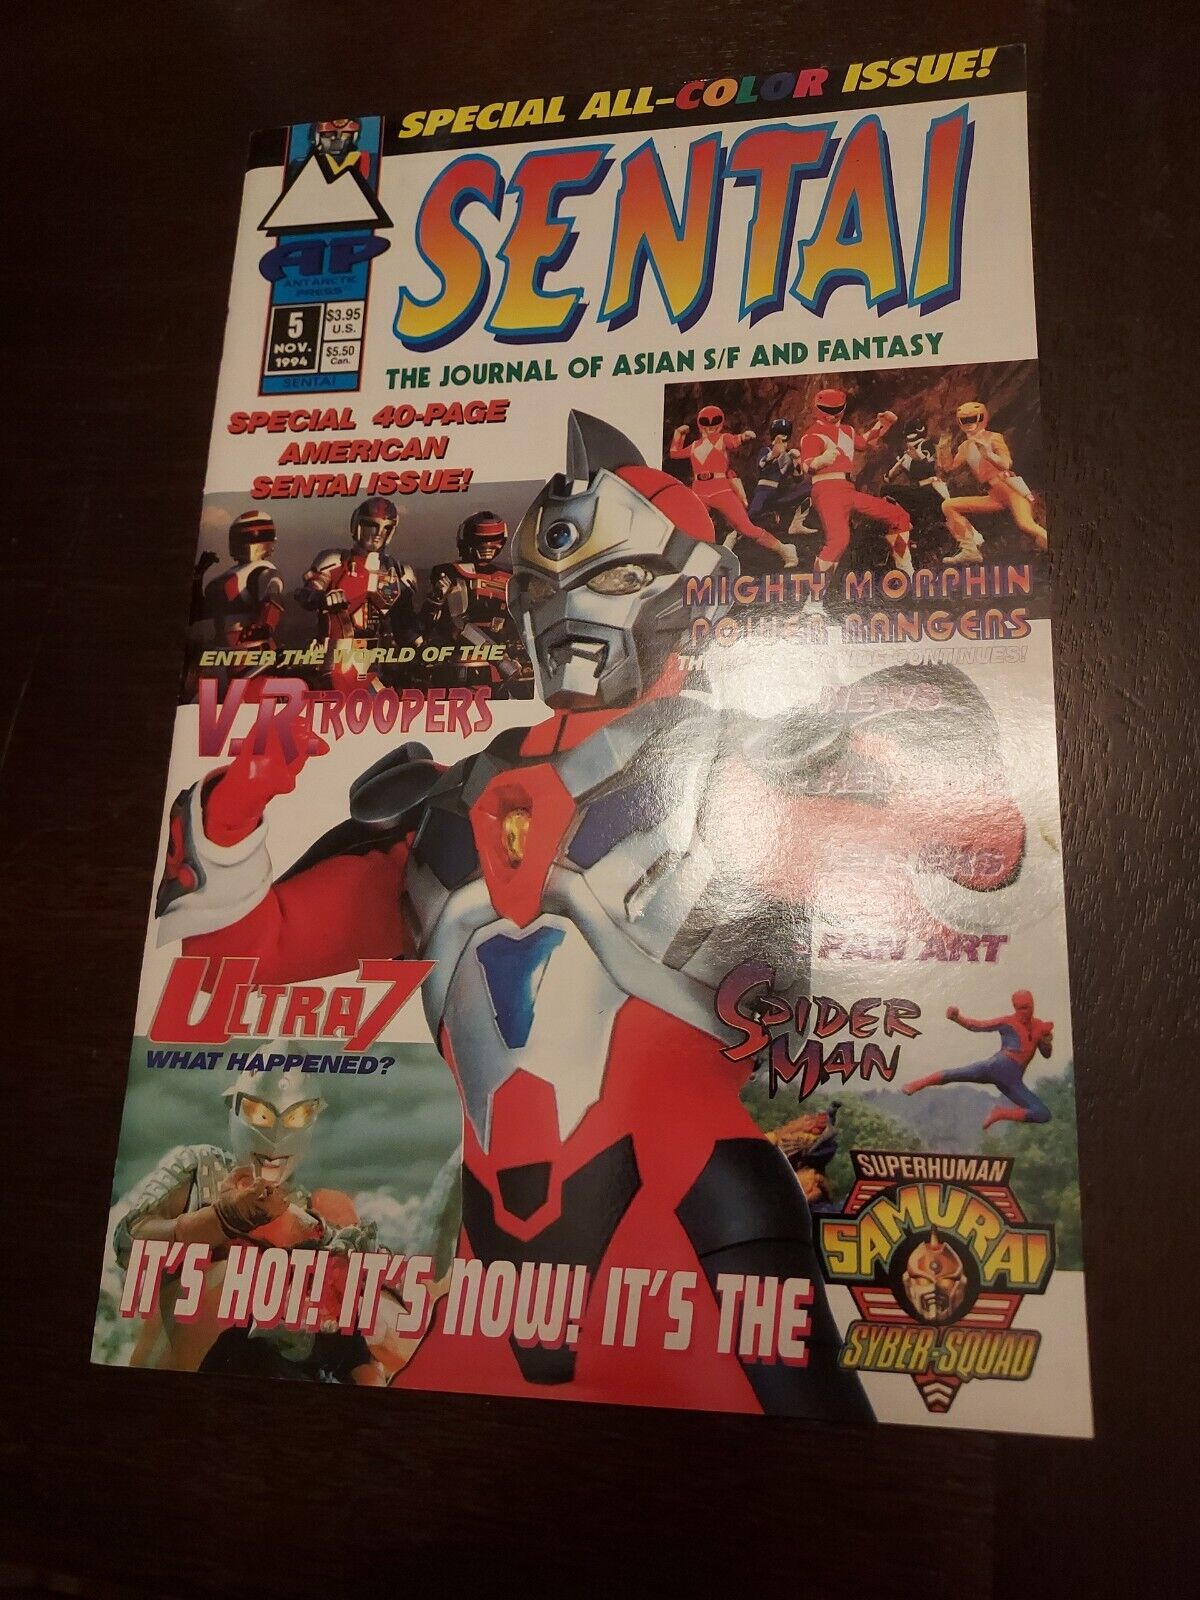  Sentai #5 (1994) 9.4 NM /Rare Power Rangers VR Troopers Special